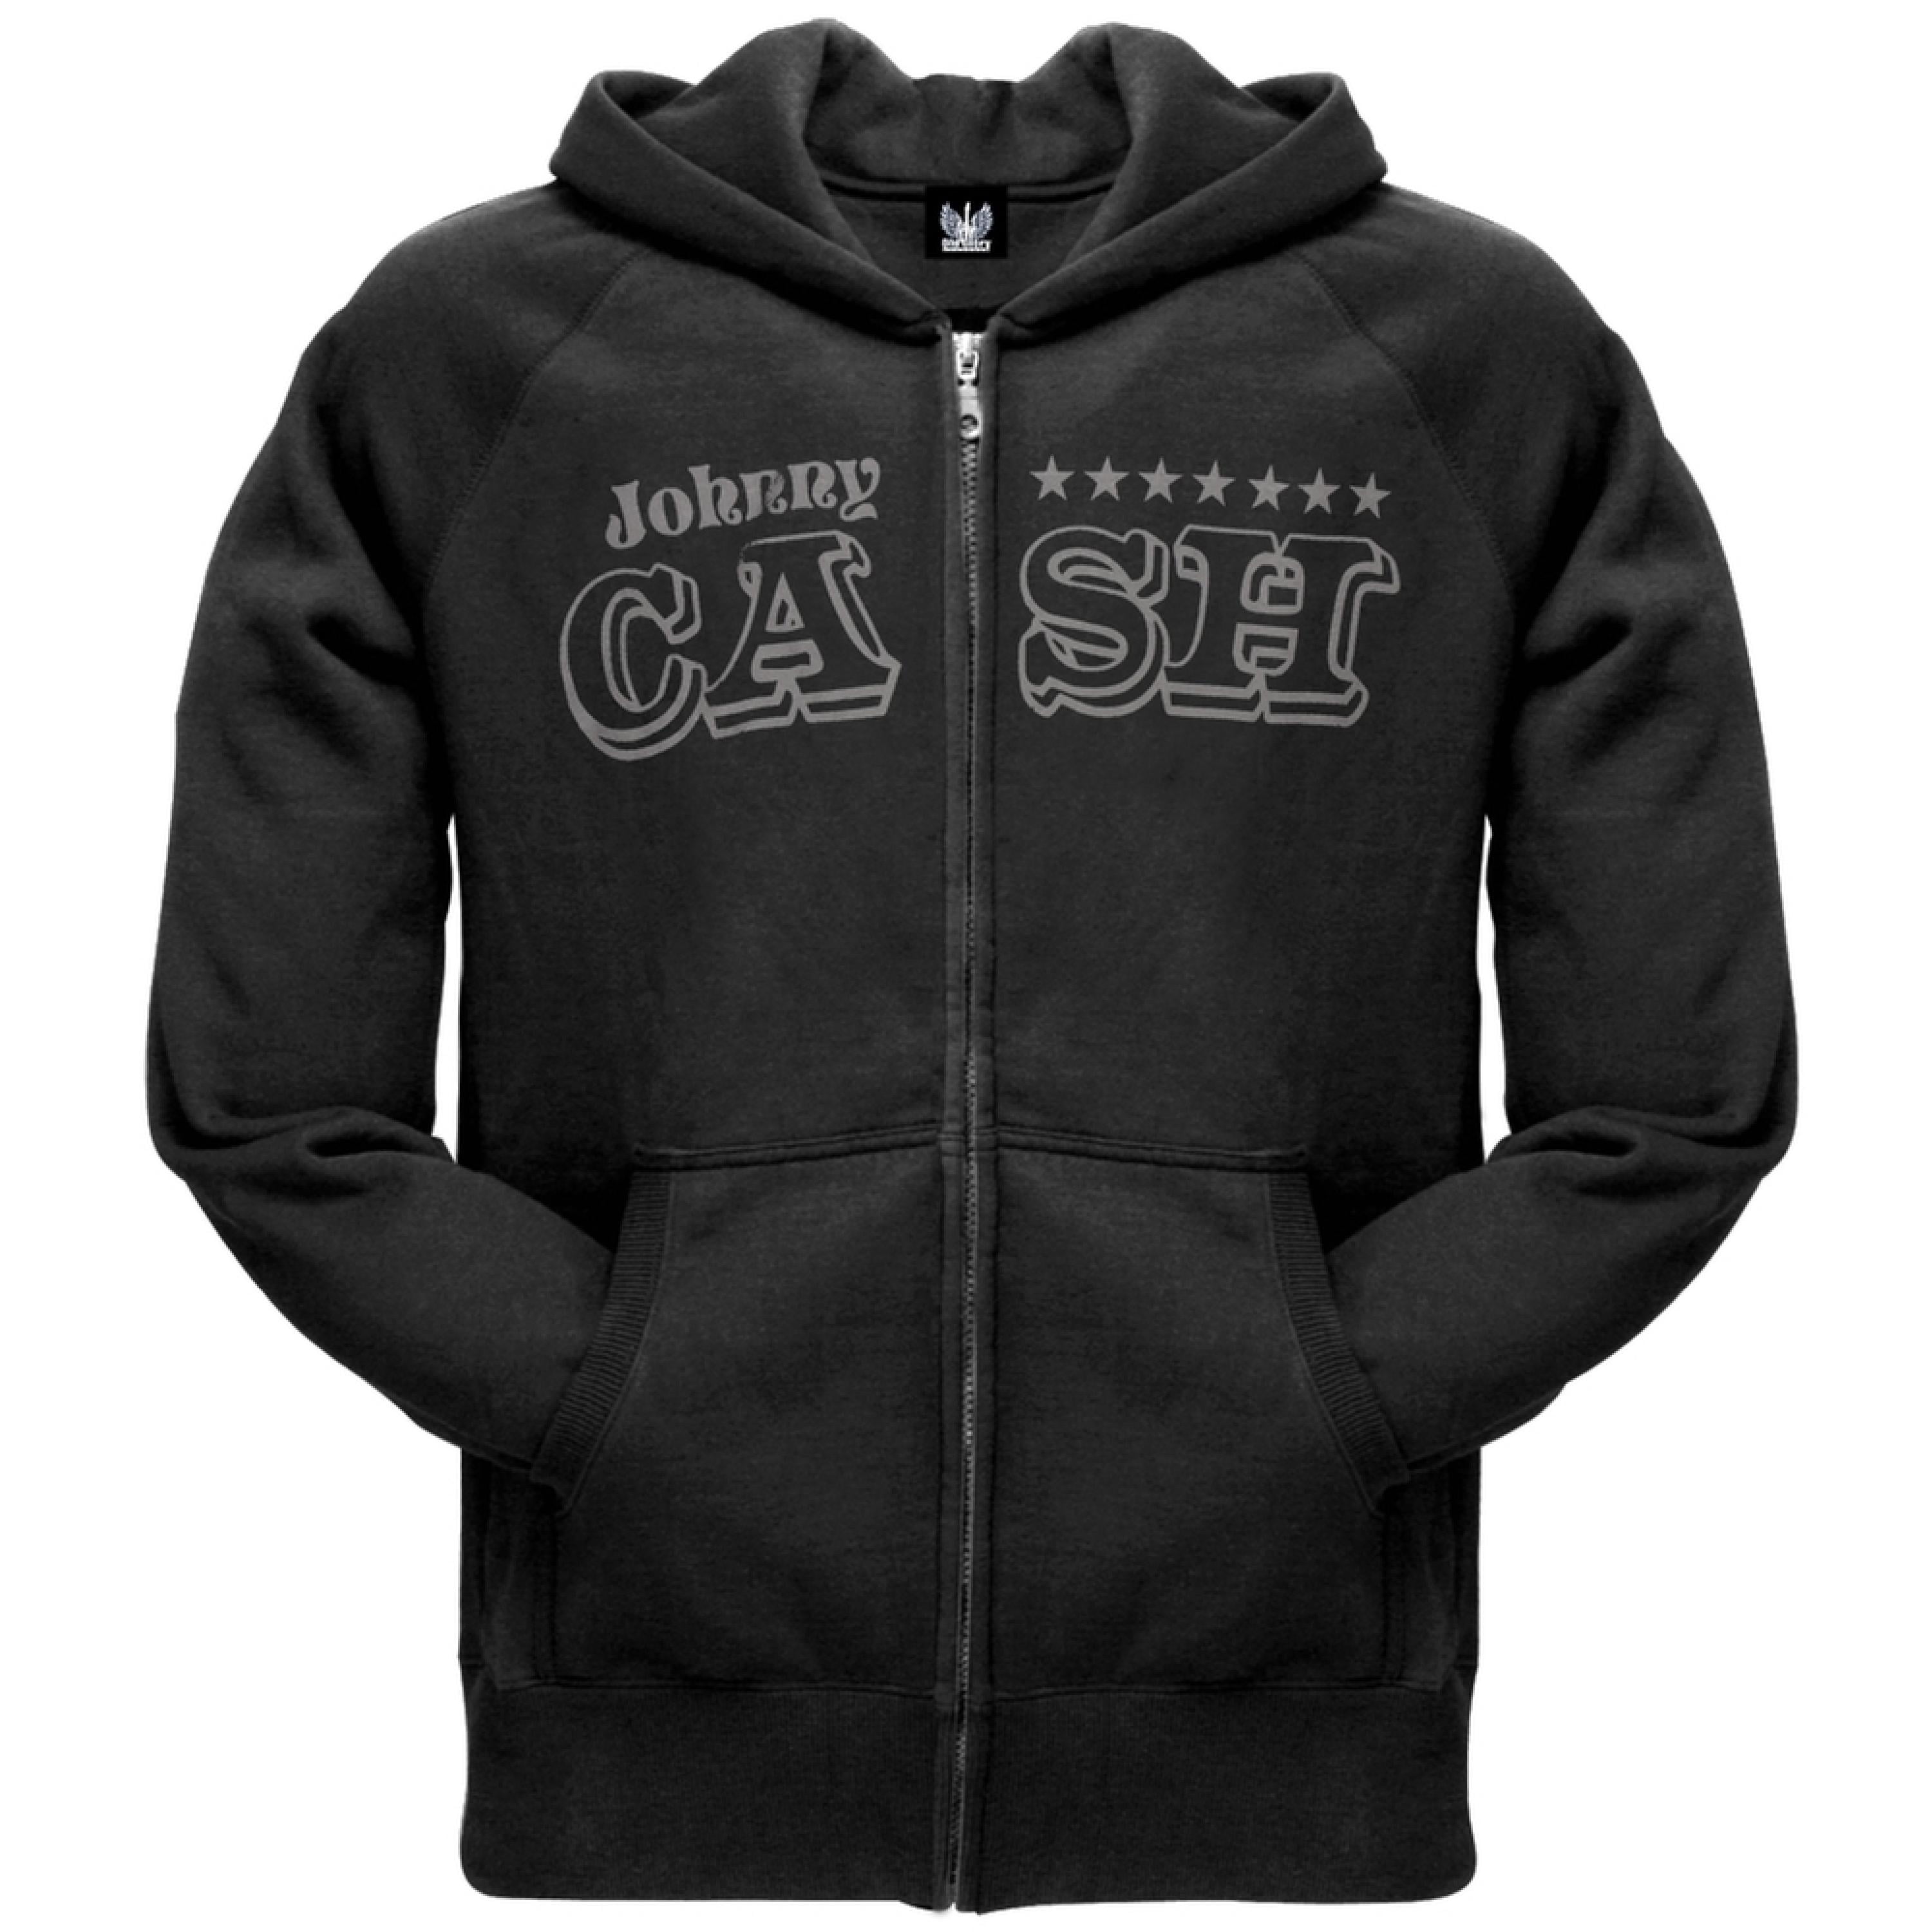 Pekivide Men Johnny Cash Trend Black Hoodie Sweatshirt Jacket Pullover Tops